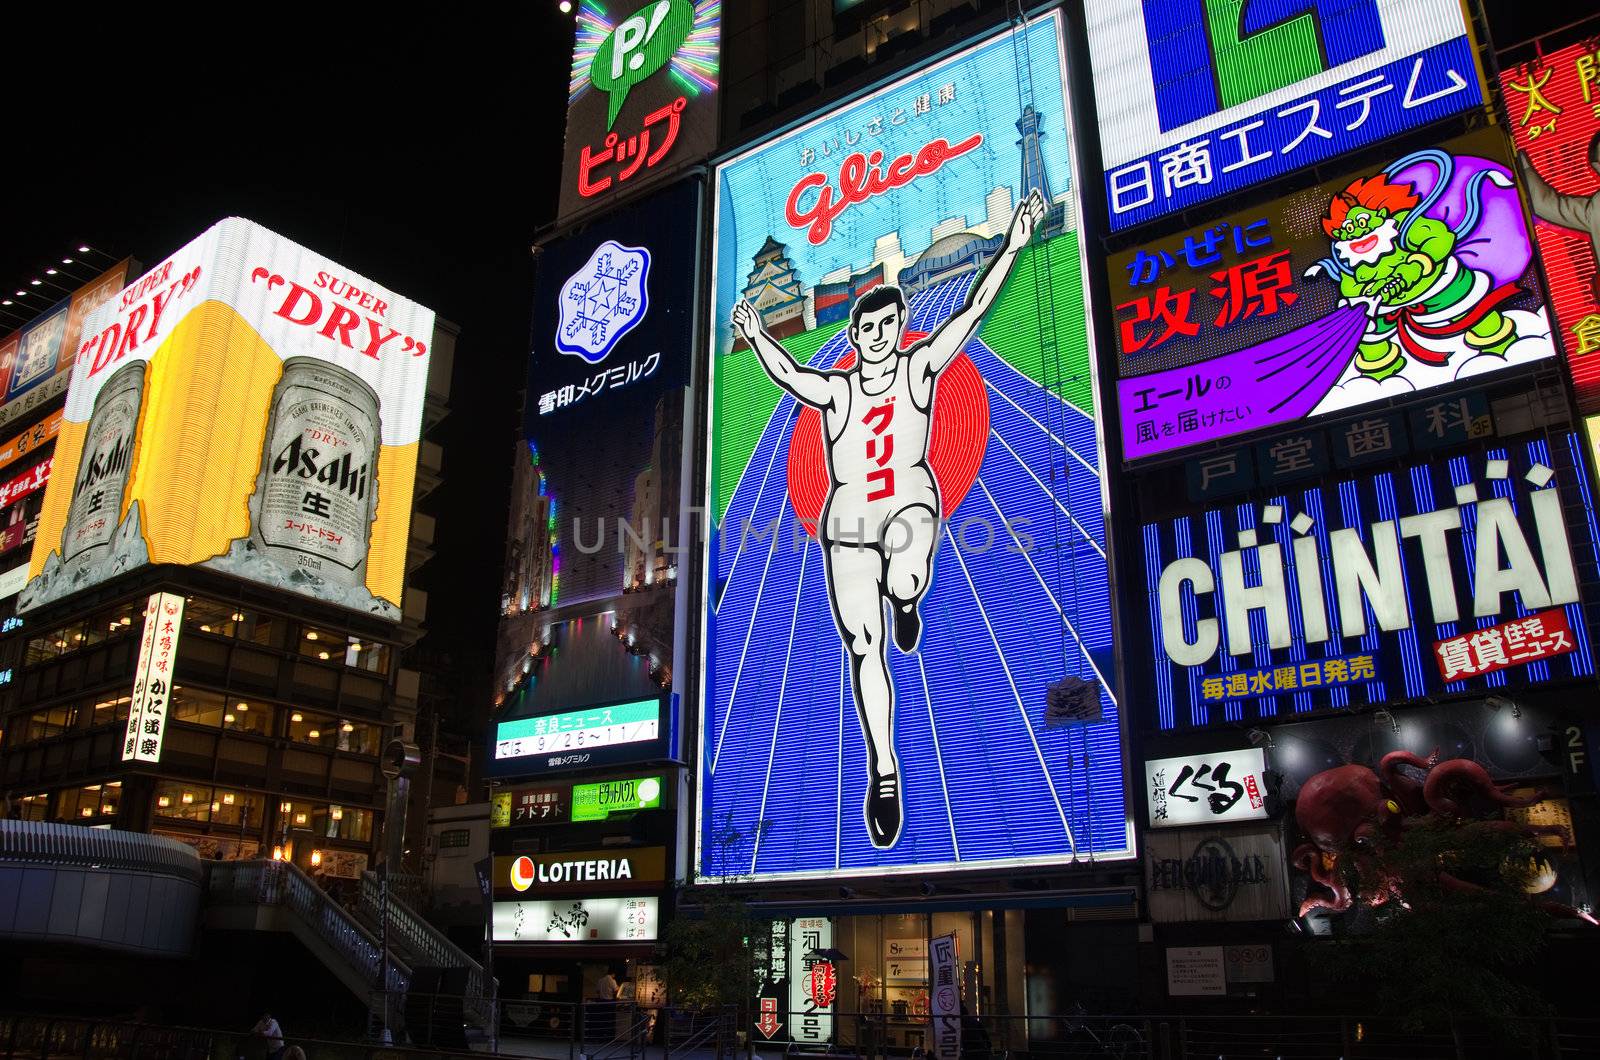 OSAKA, JAPAN - September 21: The famous Glico Man billboard in Dotombori, a popular entertainment district in Osaka on September 21, 2012 in Osaka, Japan